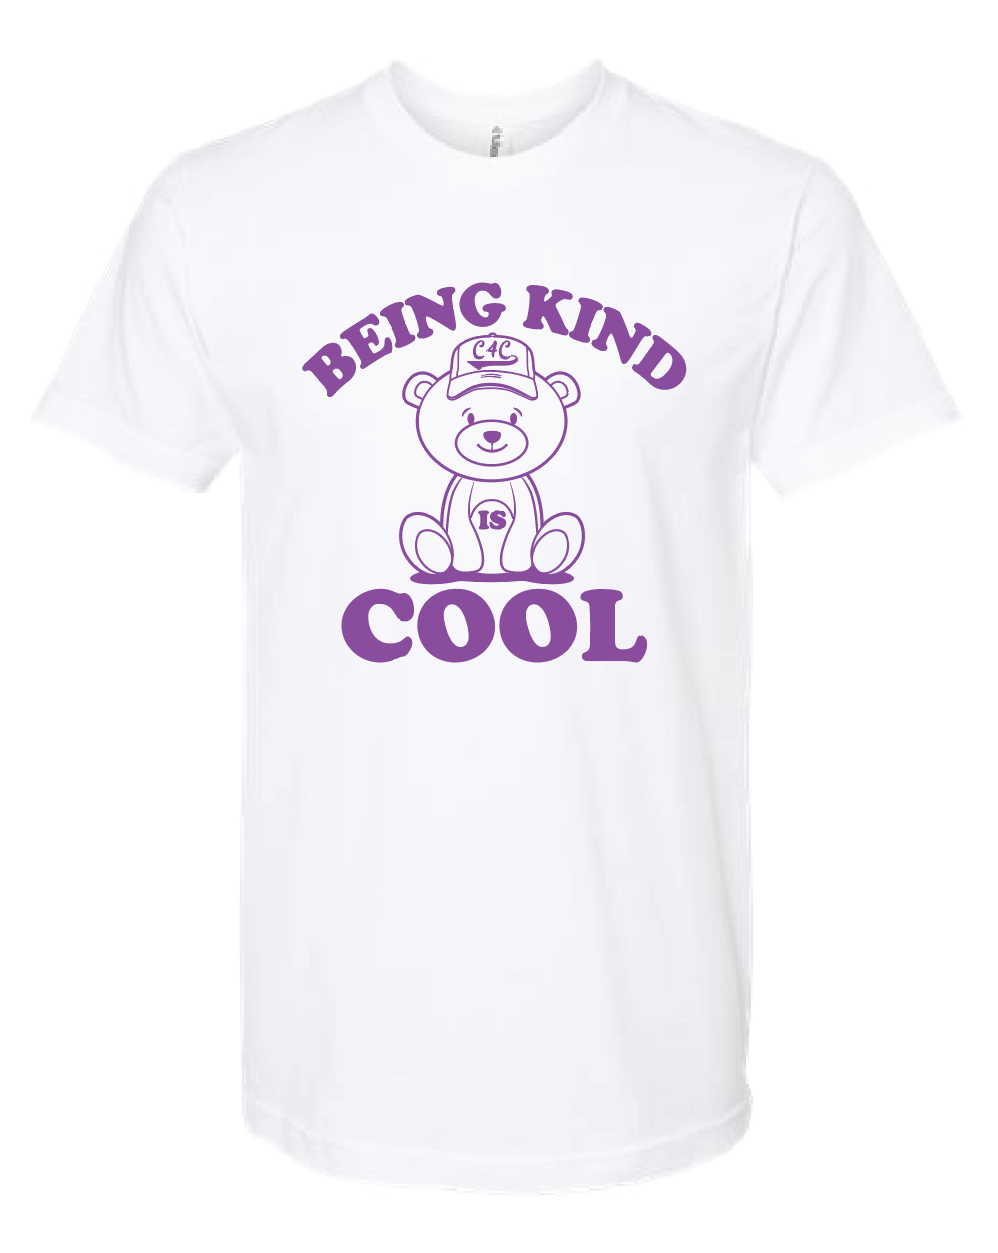 Being Kind is Cool Tee